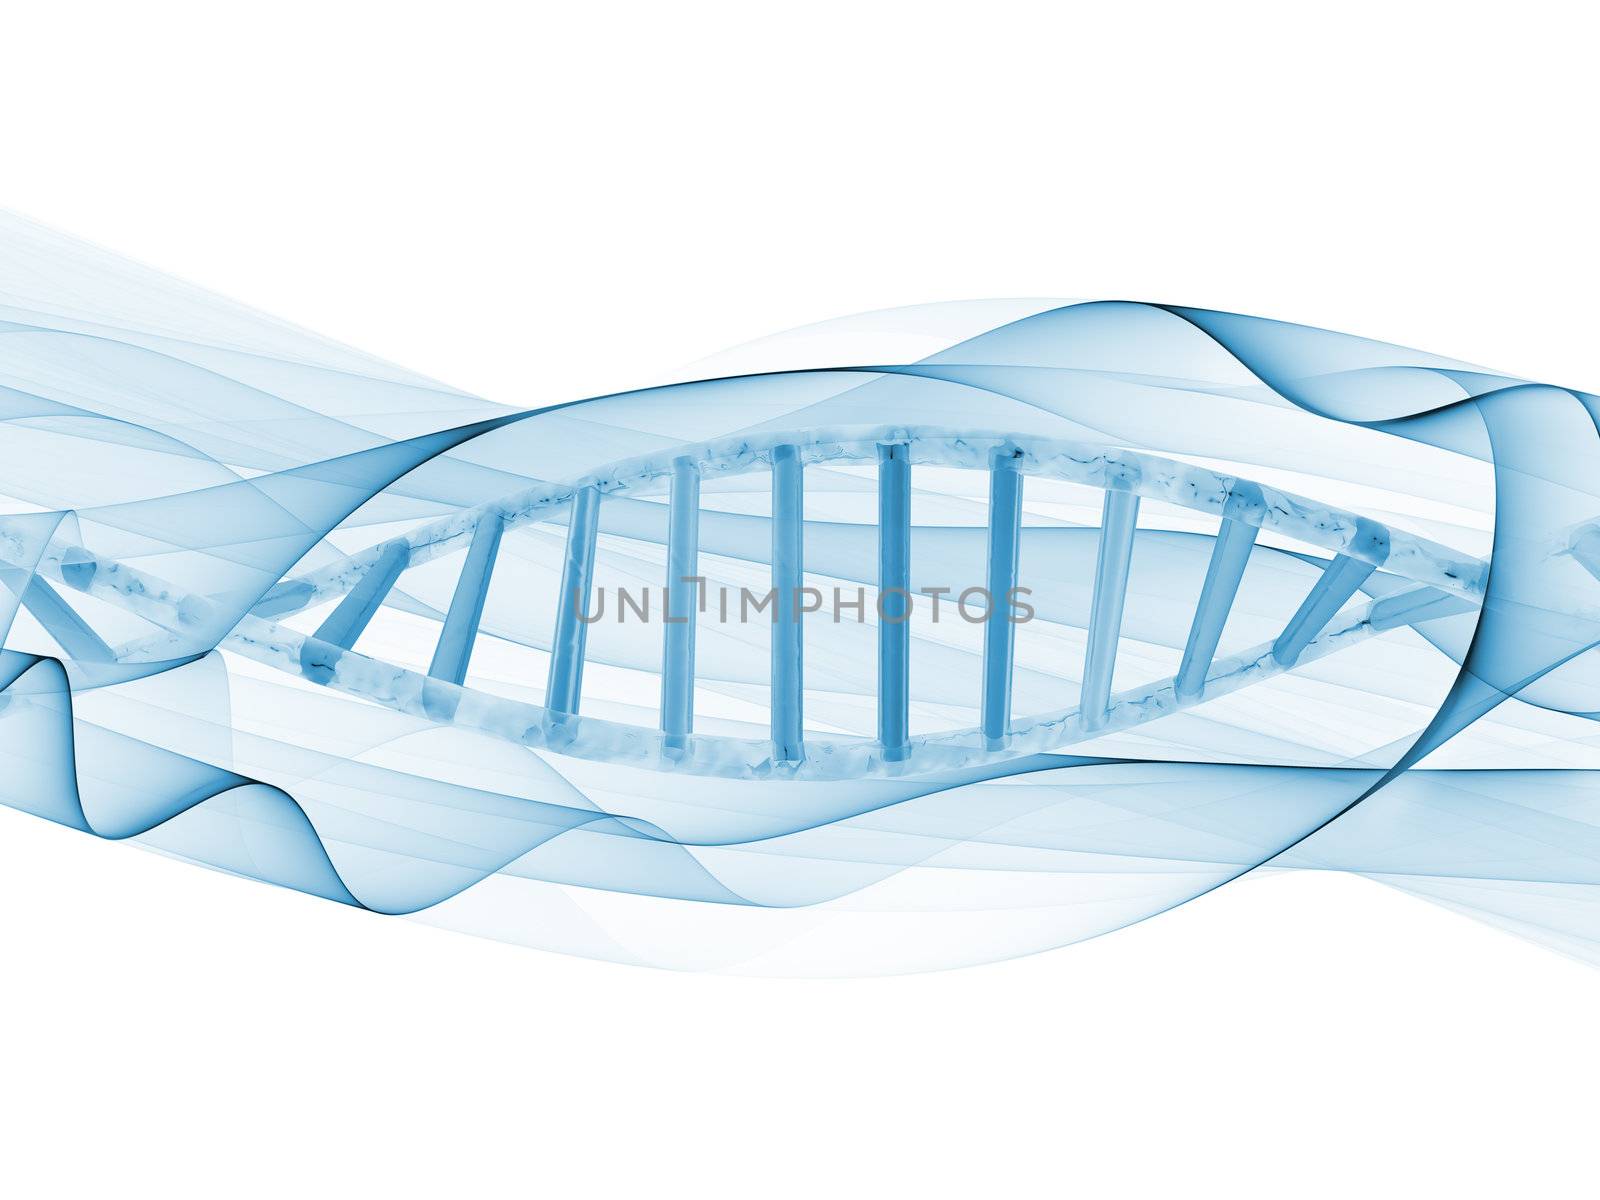 Organic DNA spiral rendered in light blue against light background